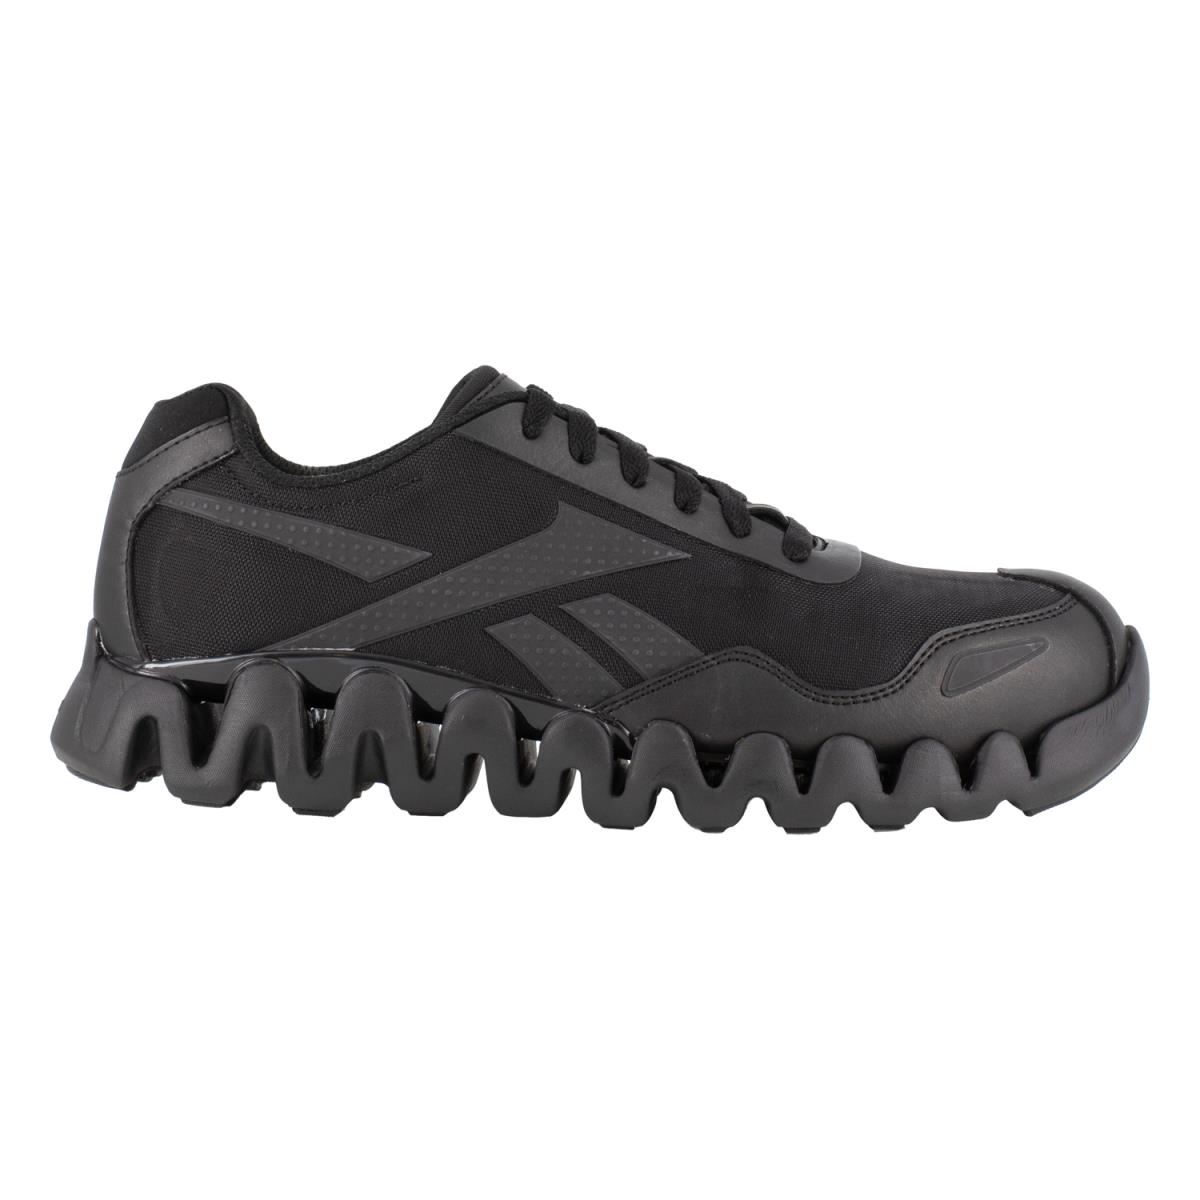 Reebok Womens Black Mesh Work Shoes Zig Pulse Athletic CT W